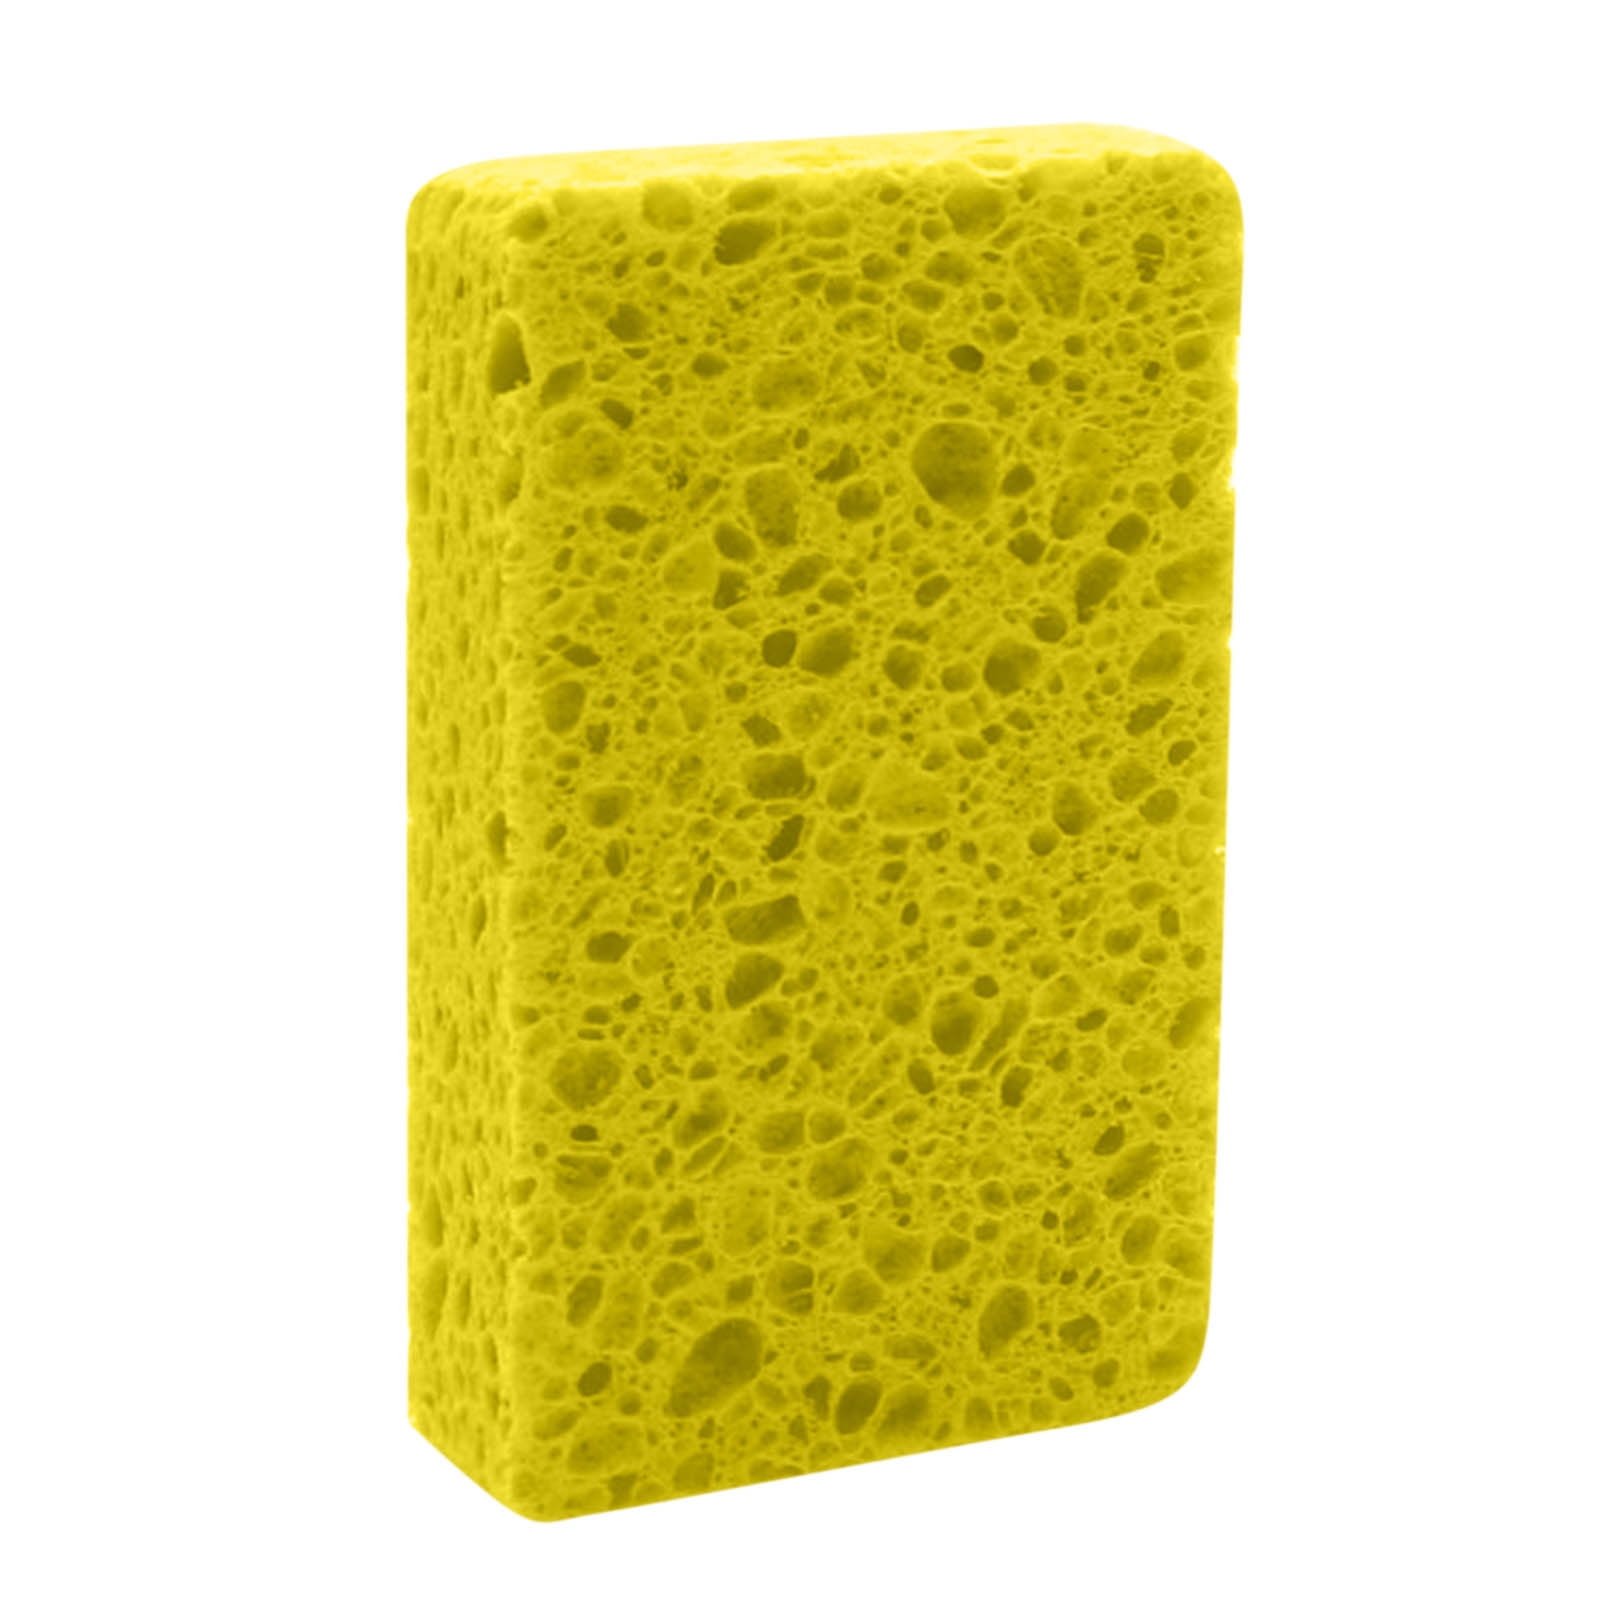 Large Cellulose Sponge Block - Full Circle Chemical